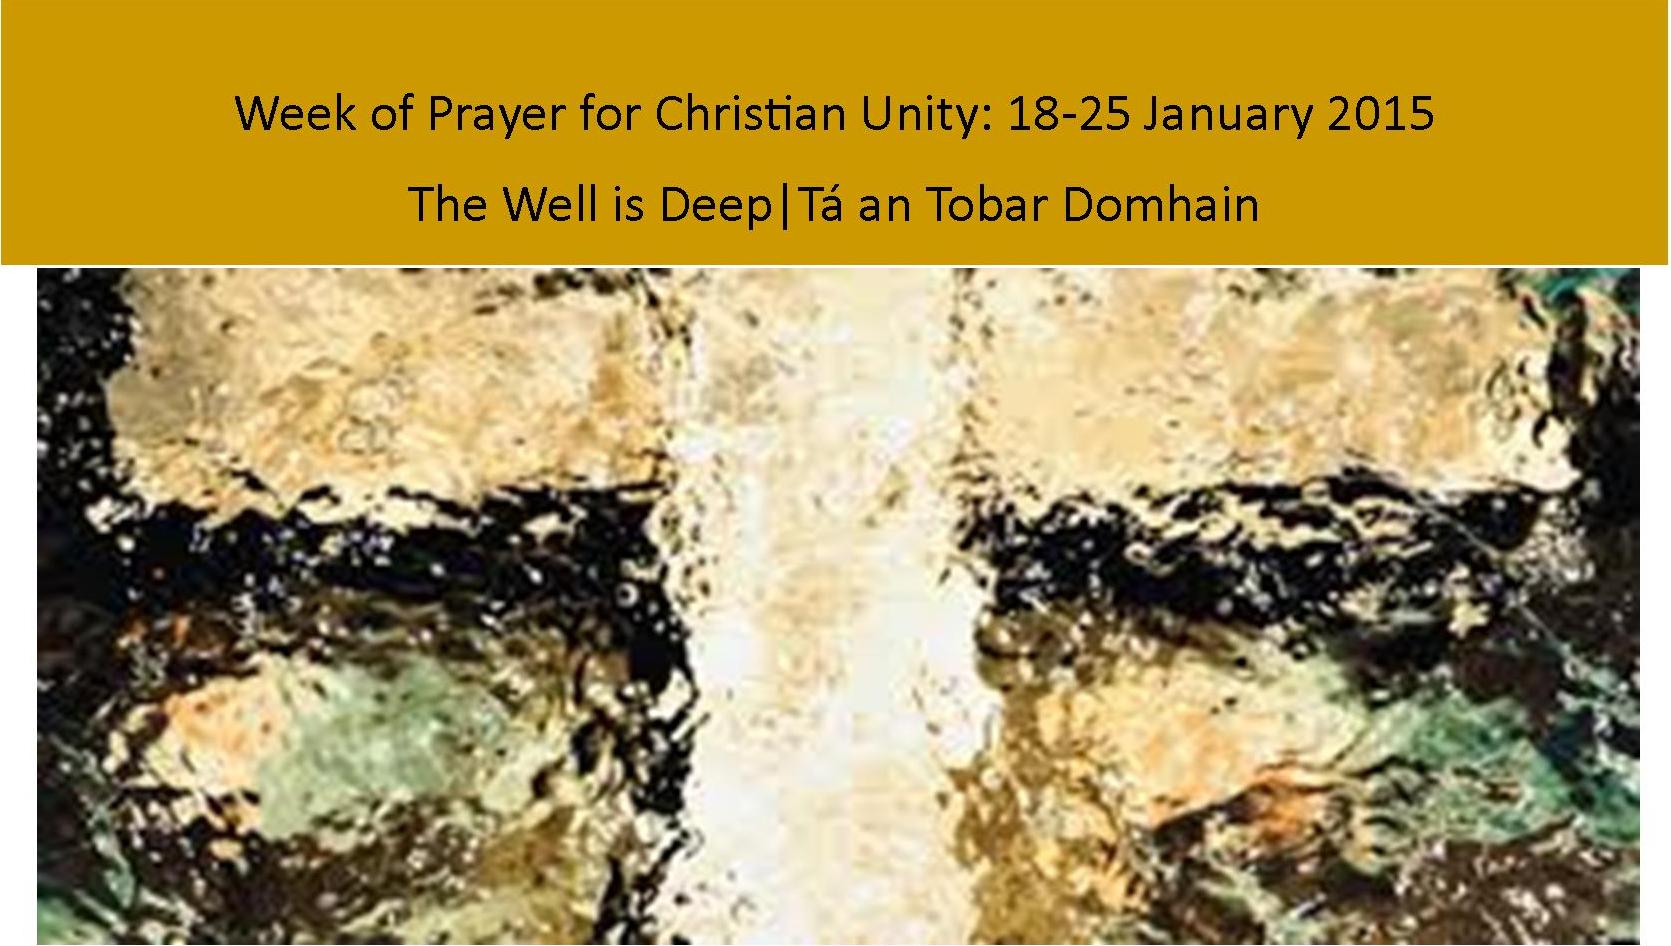 Week of Prayer for Christian Unity 2015